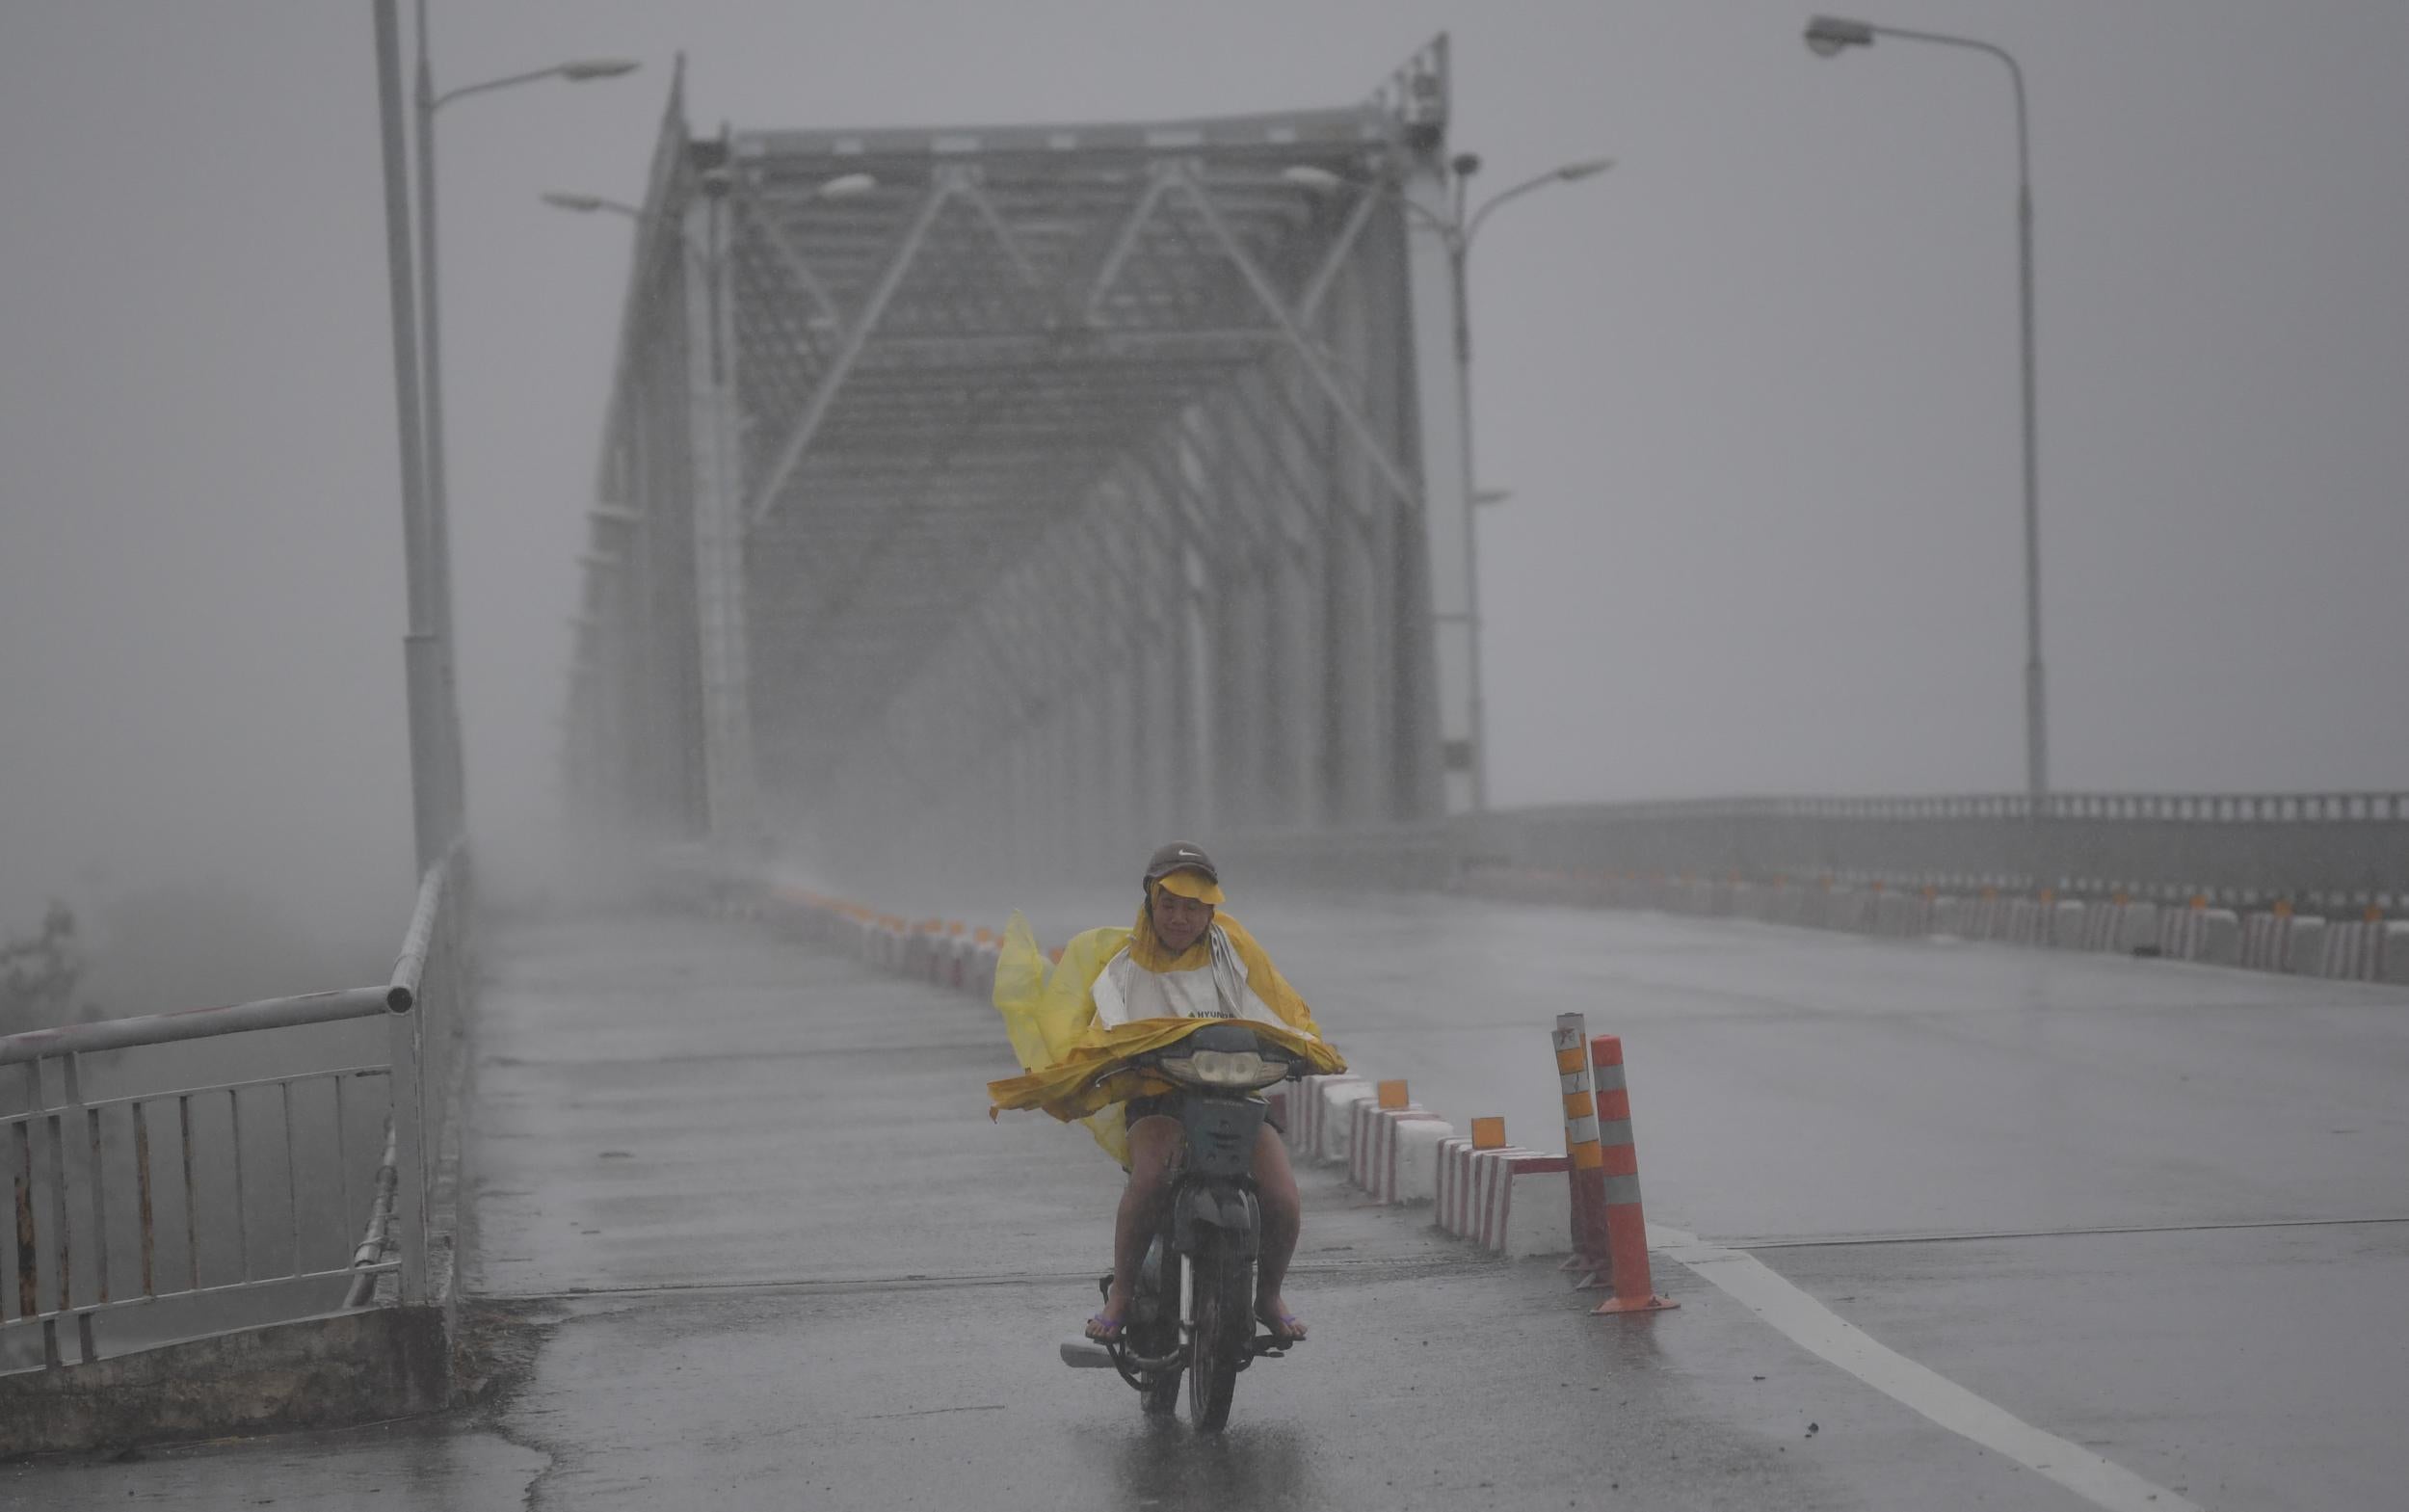 Heavy rain and wind lashed Vietnam's central coast Friday as Typhoon Doksuri made landfall, prompting mass evacuations